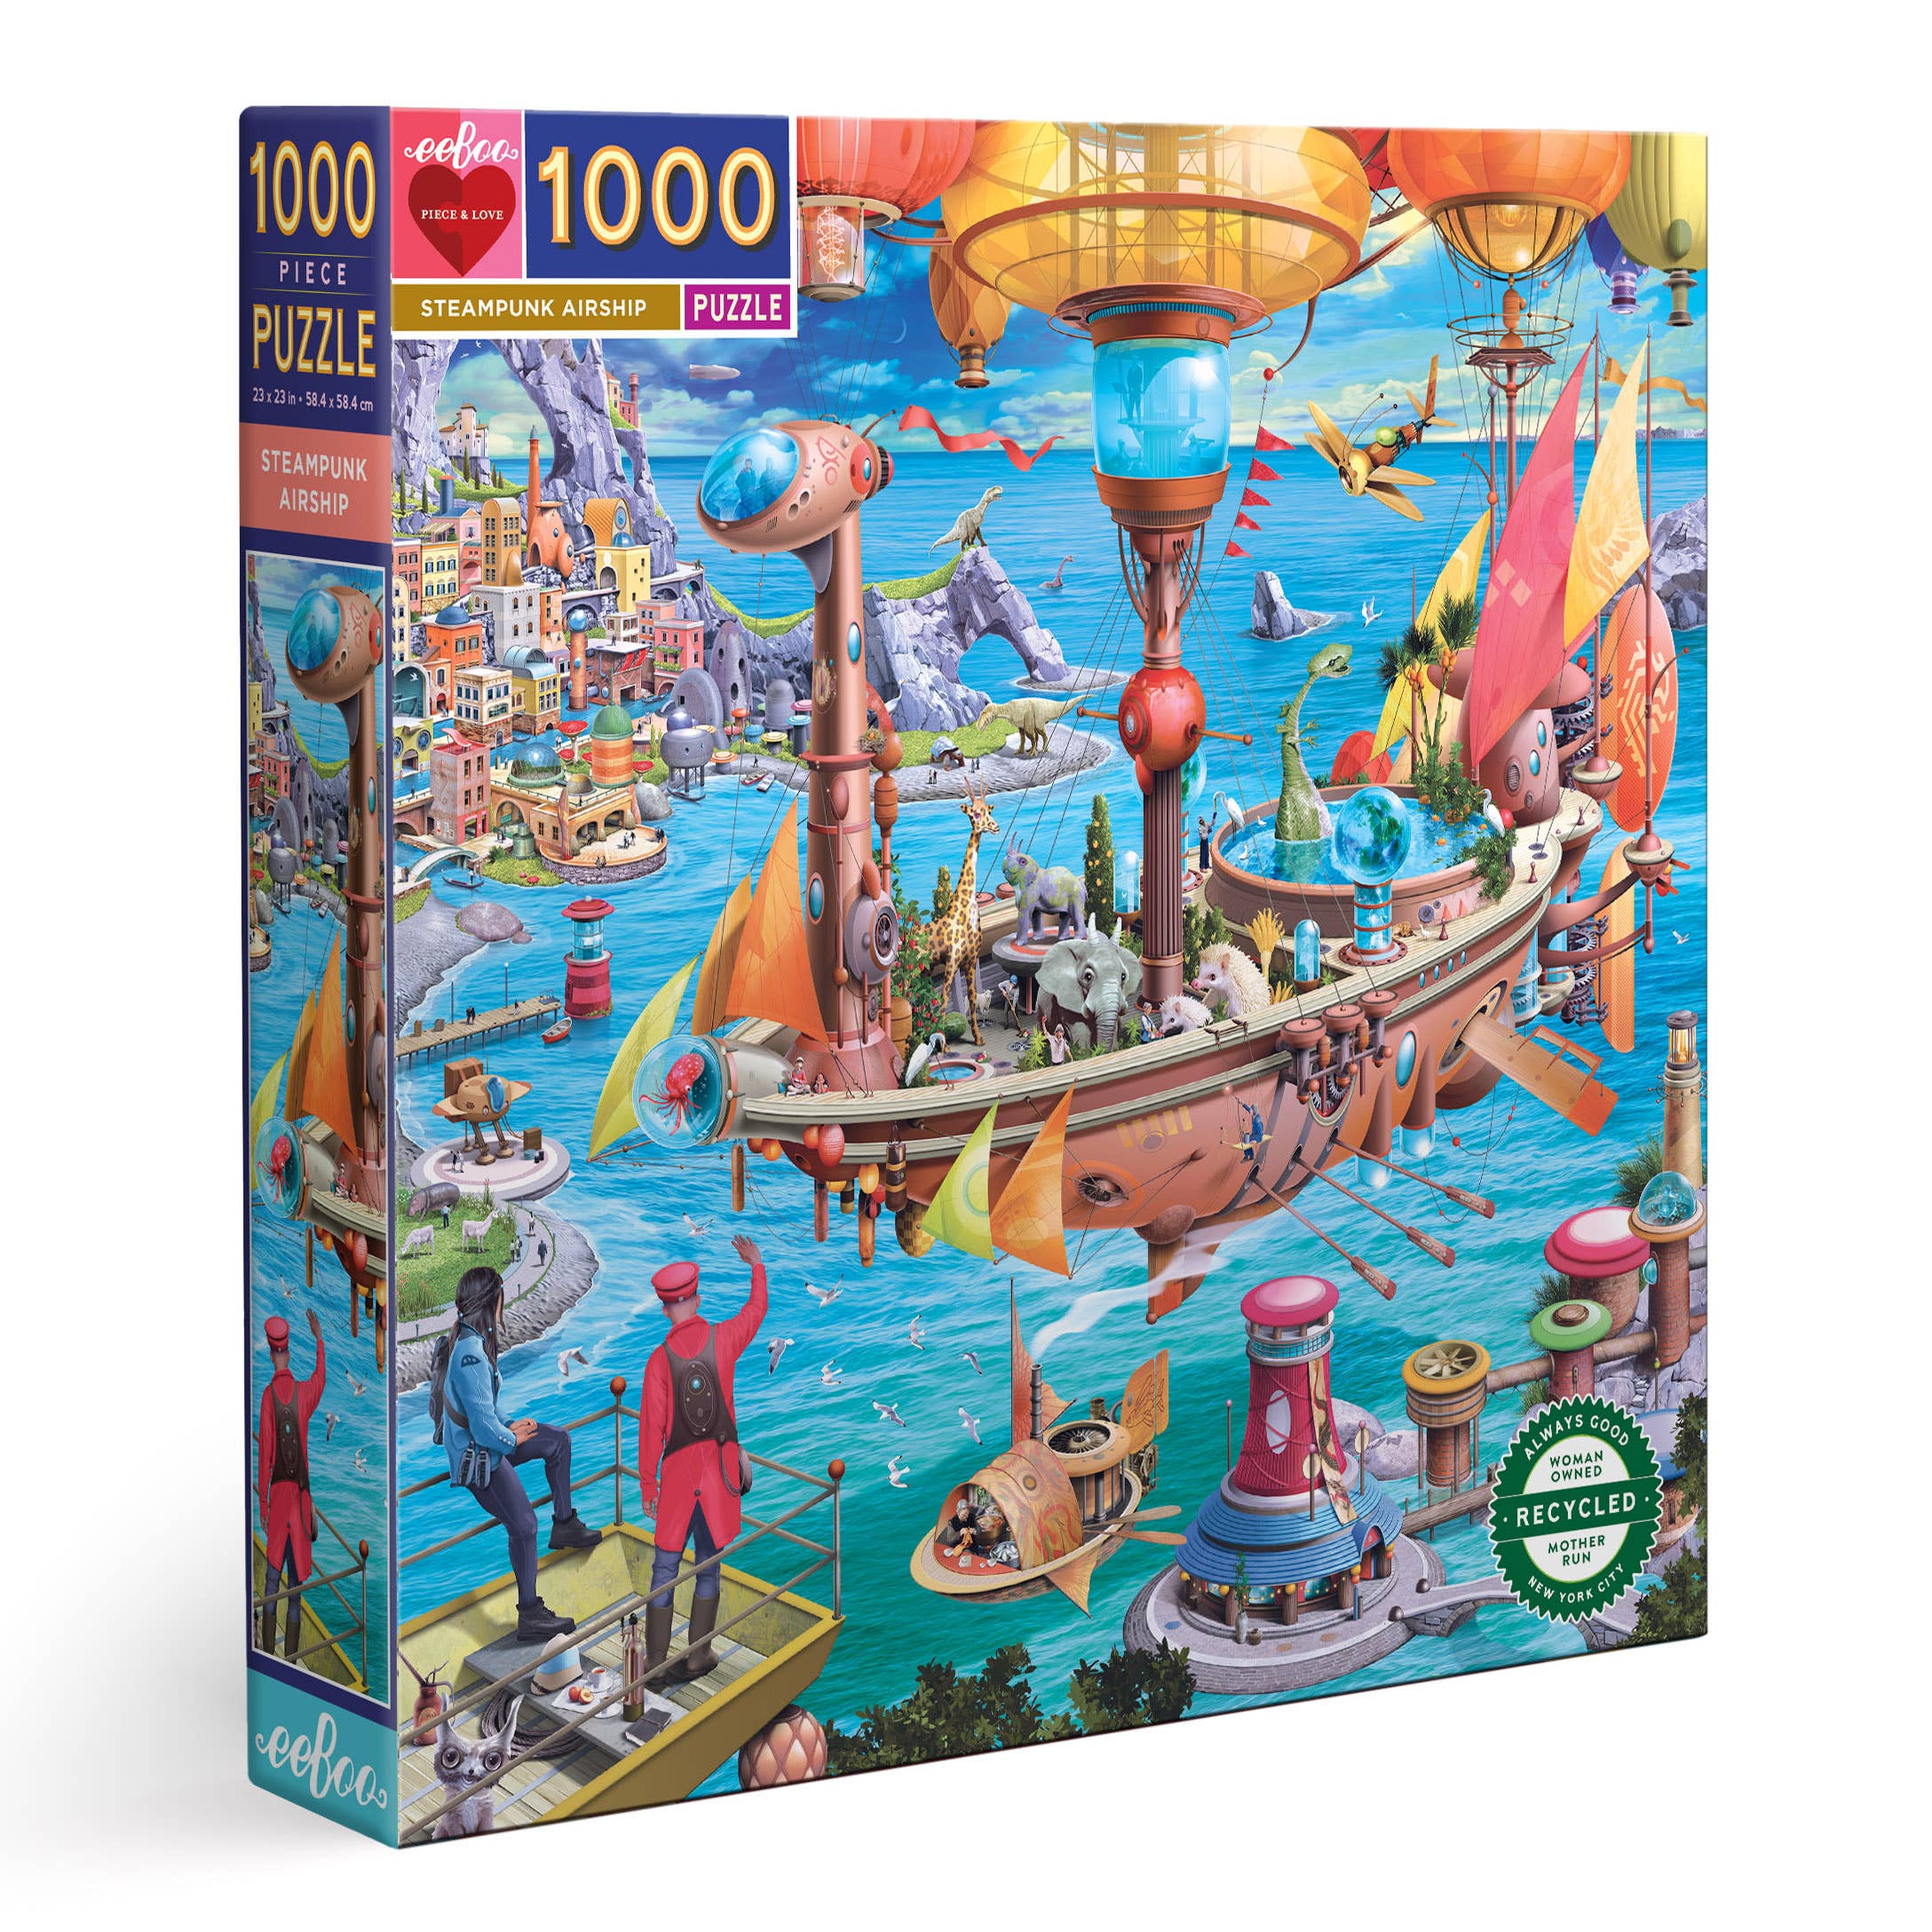 Steampunk Airship 1000 Piece Square Puzzle